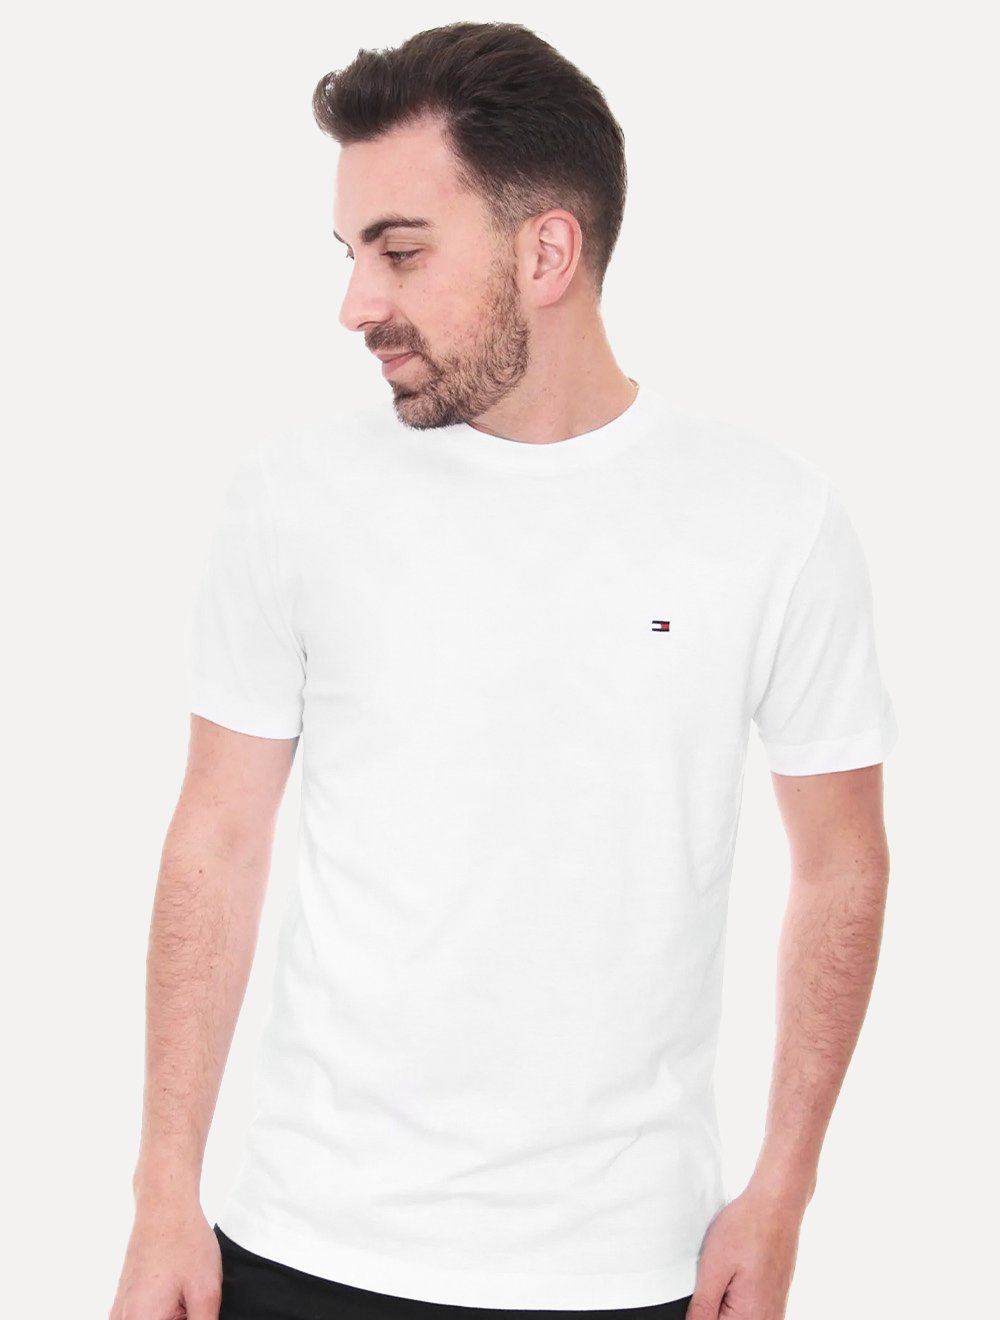 Camiseta Tommy Hilfiger Masculina Essential Cotton Branca